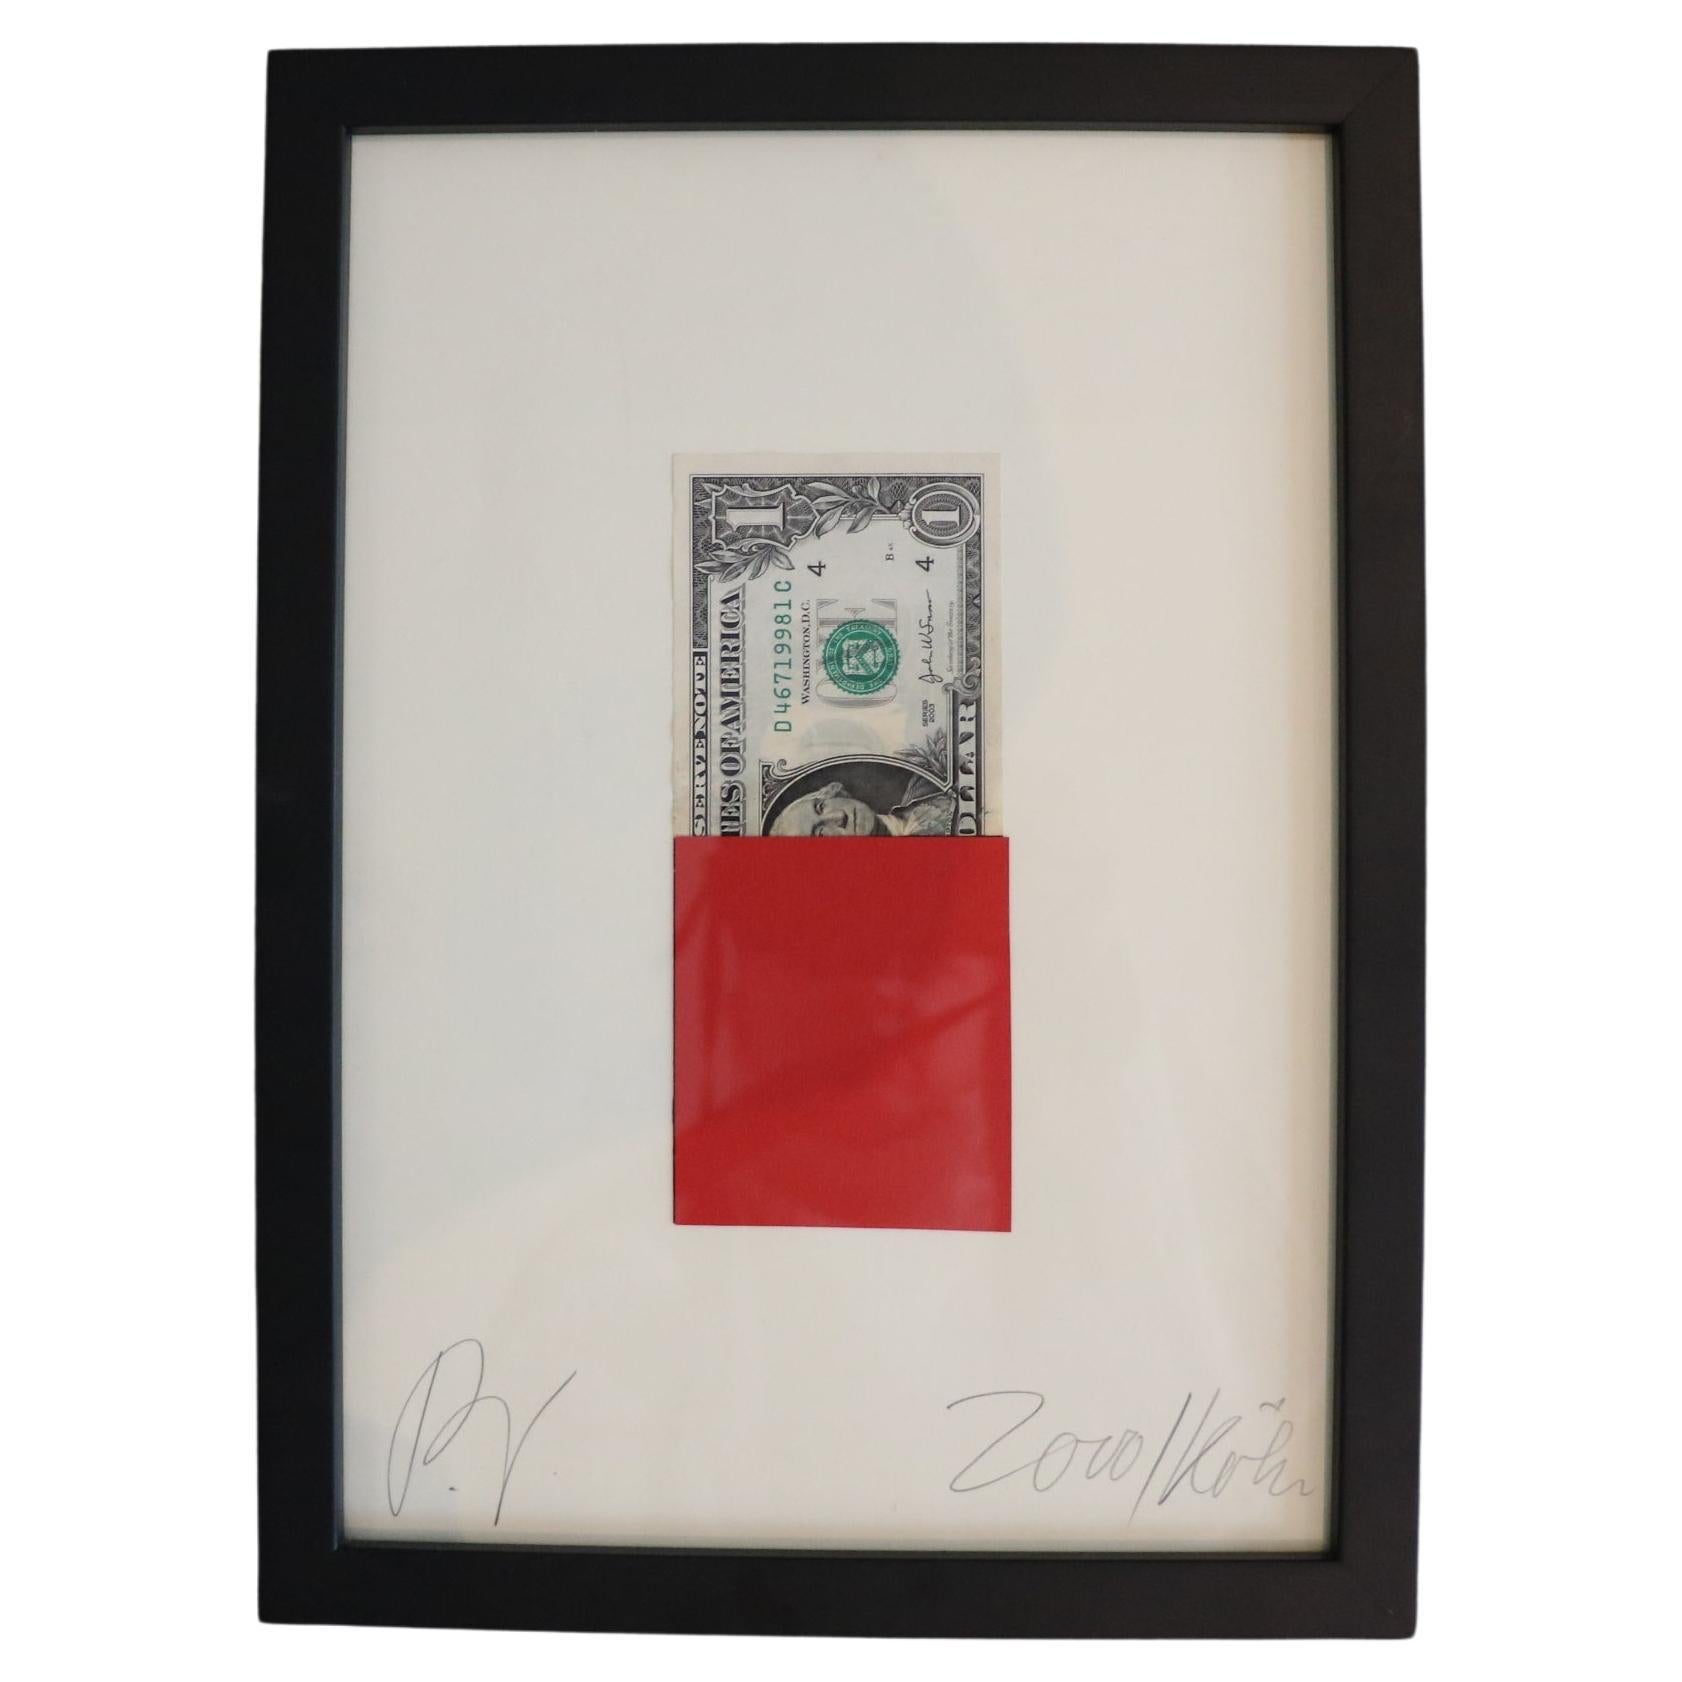 One Dollar on Paper by the German Artist Peter Krüger, Germany, 2000